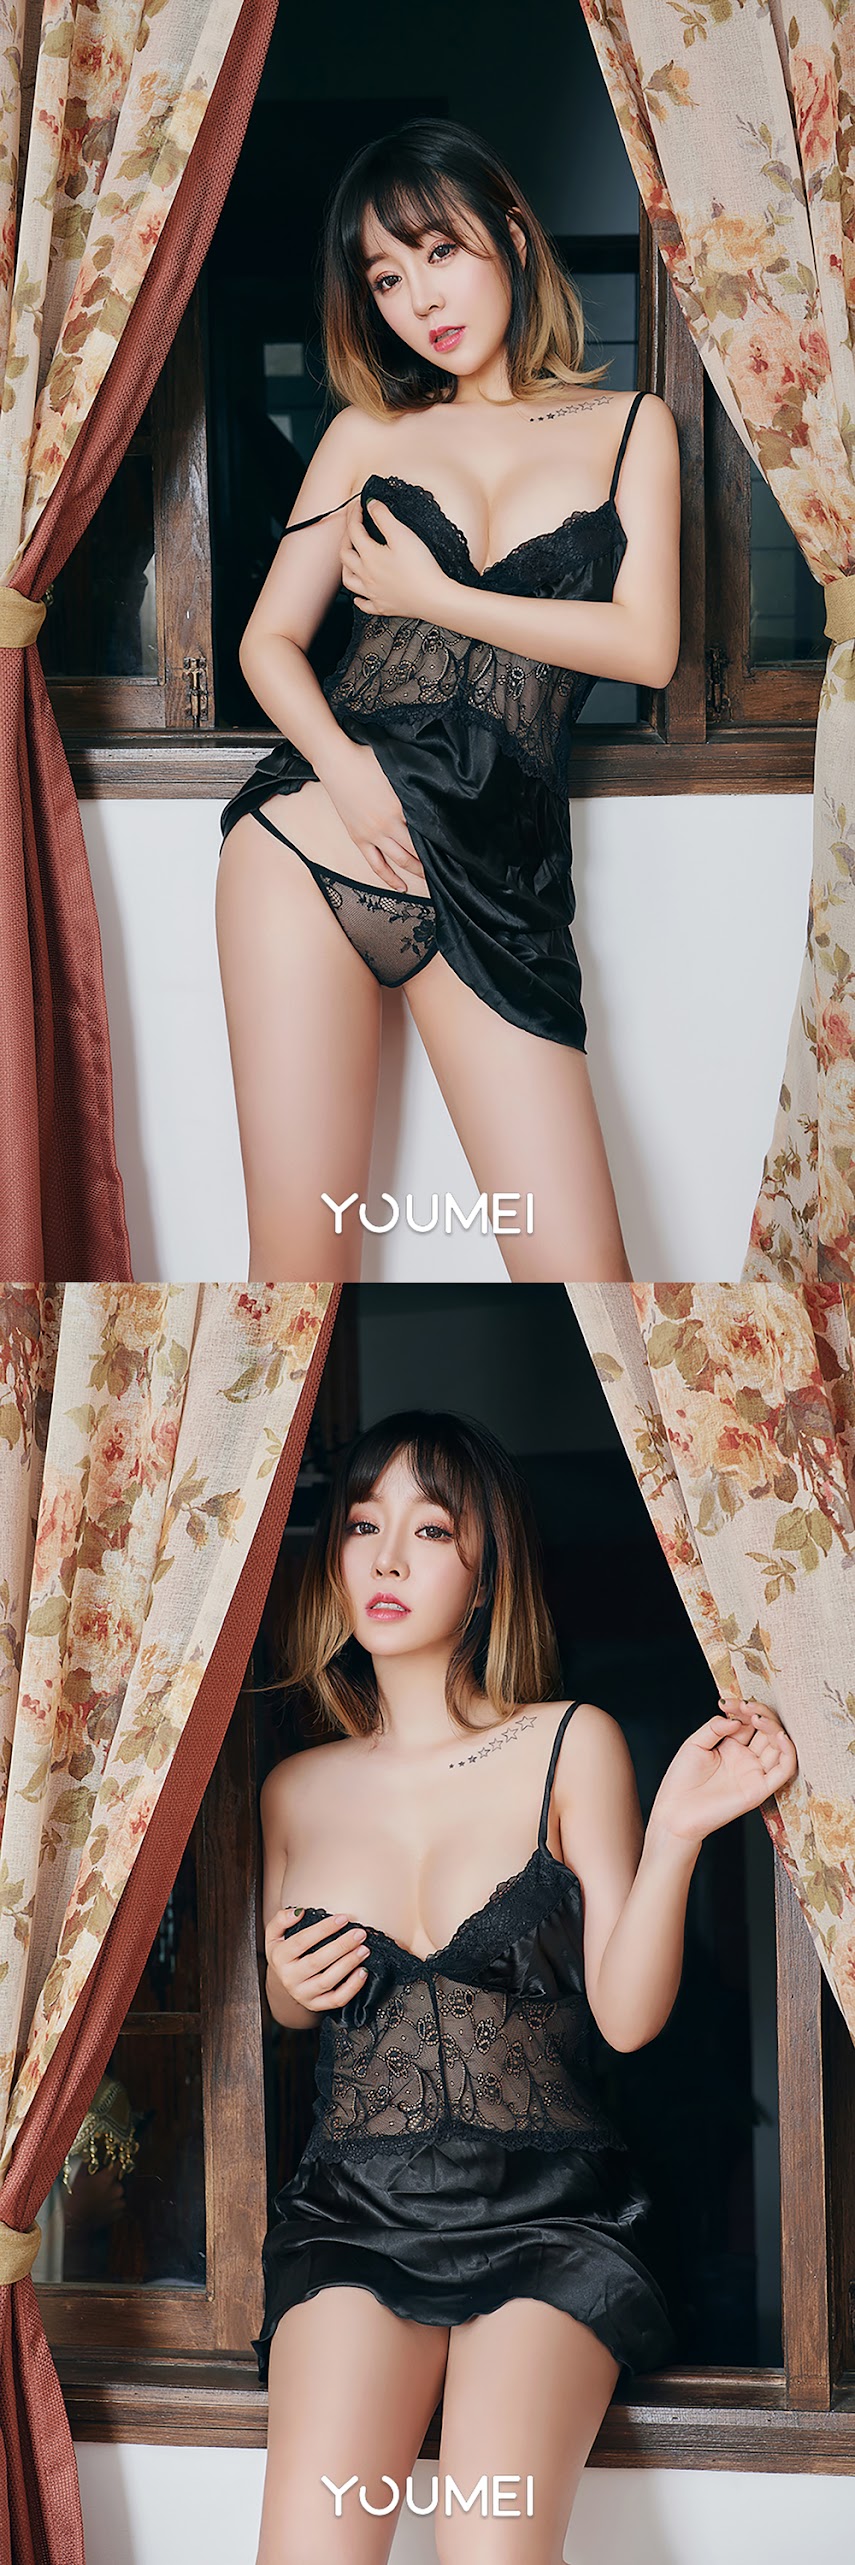 YouMei 2018.12.29 Vol.099 sexy girls image jav